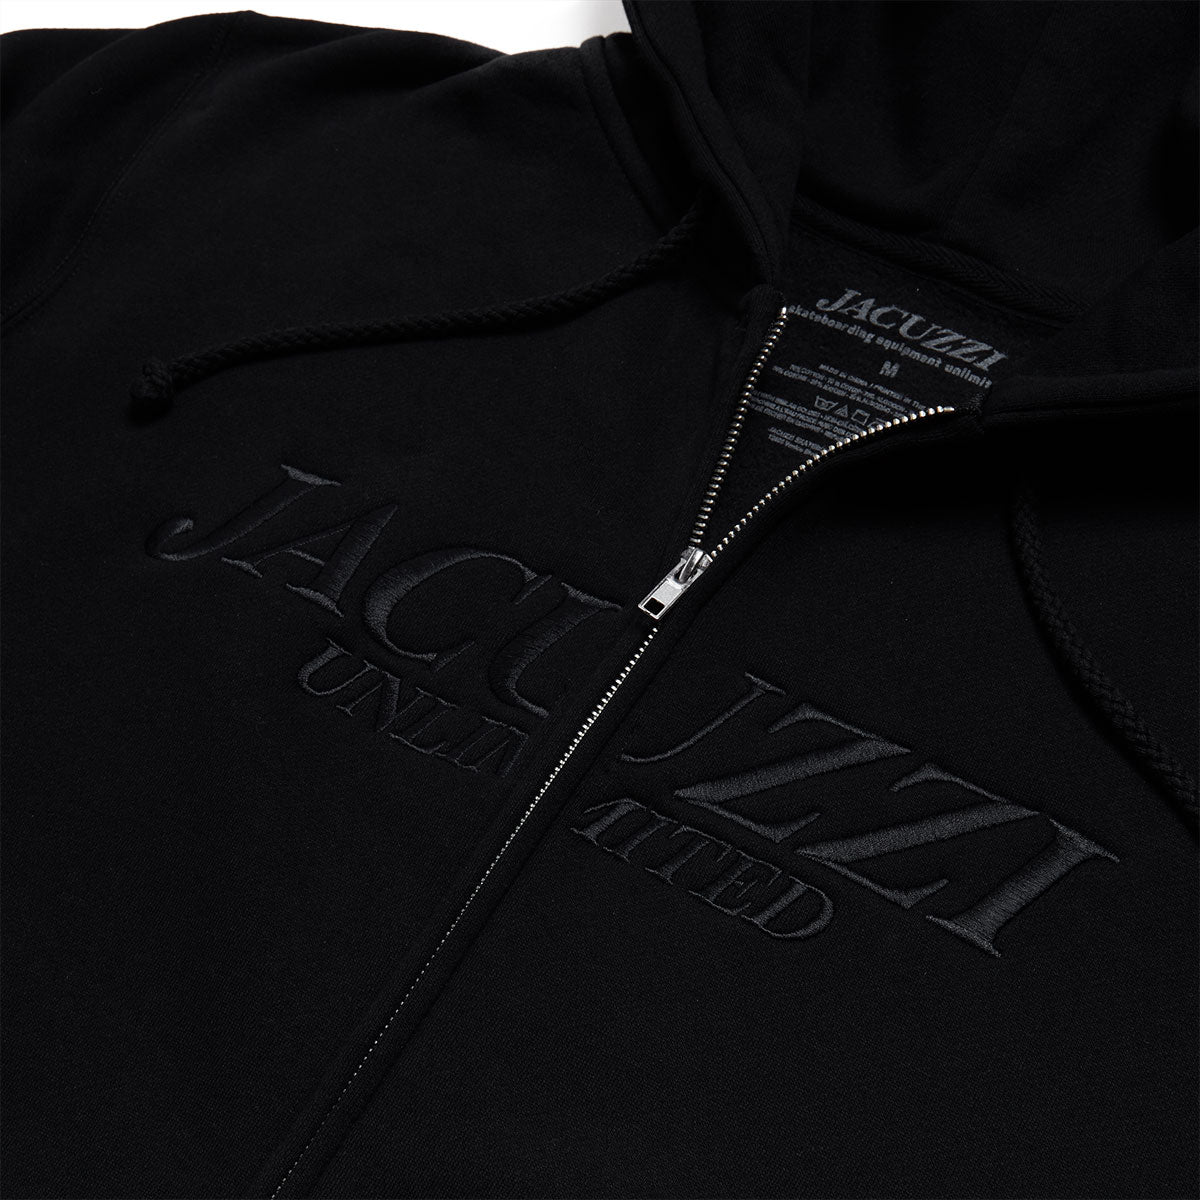 Jacuzzi Flavor Embroidered Zip Up Hoodie - Black image 2